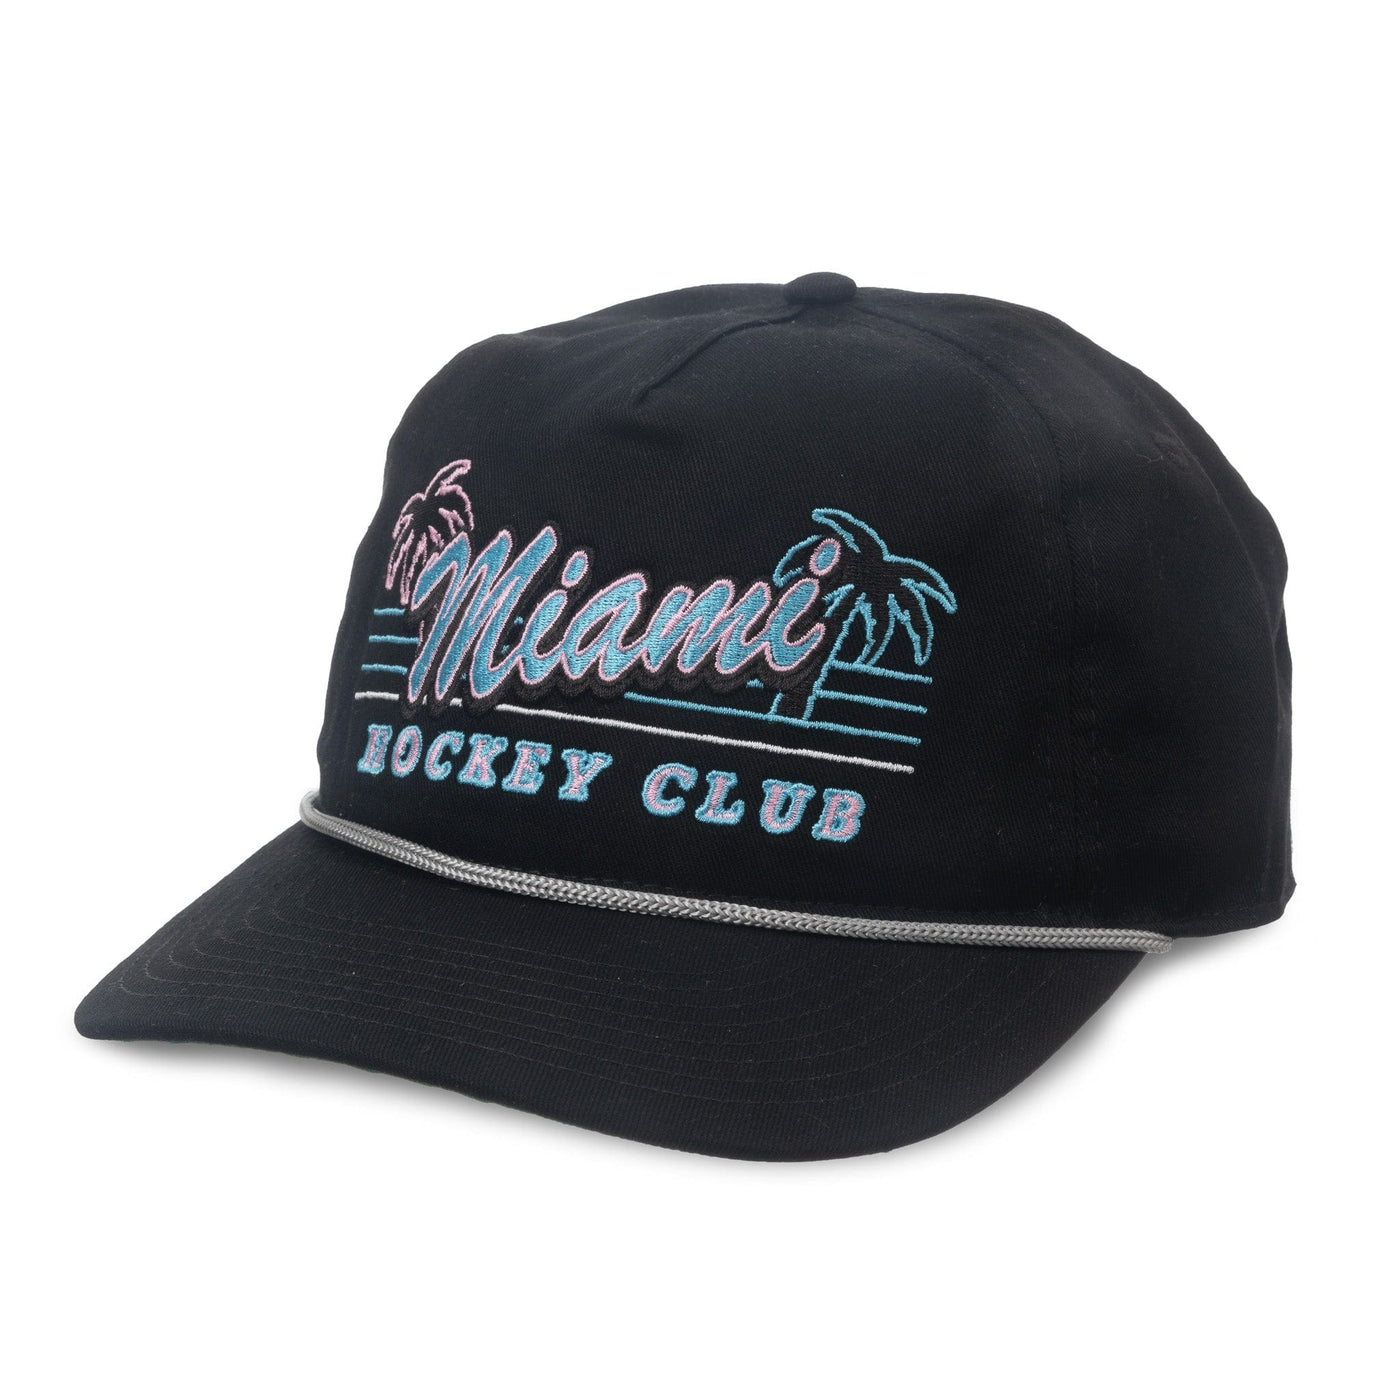 Celly Hockey Miami Hockey Club Snapback Hat - Black - TheHockeyShop.com